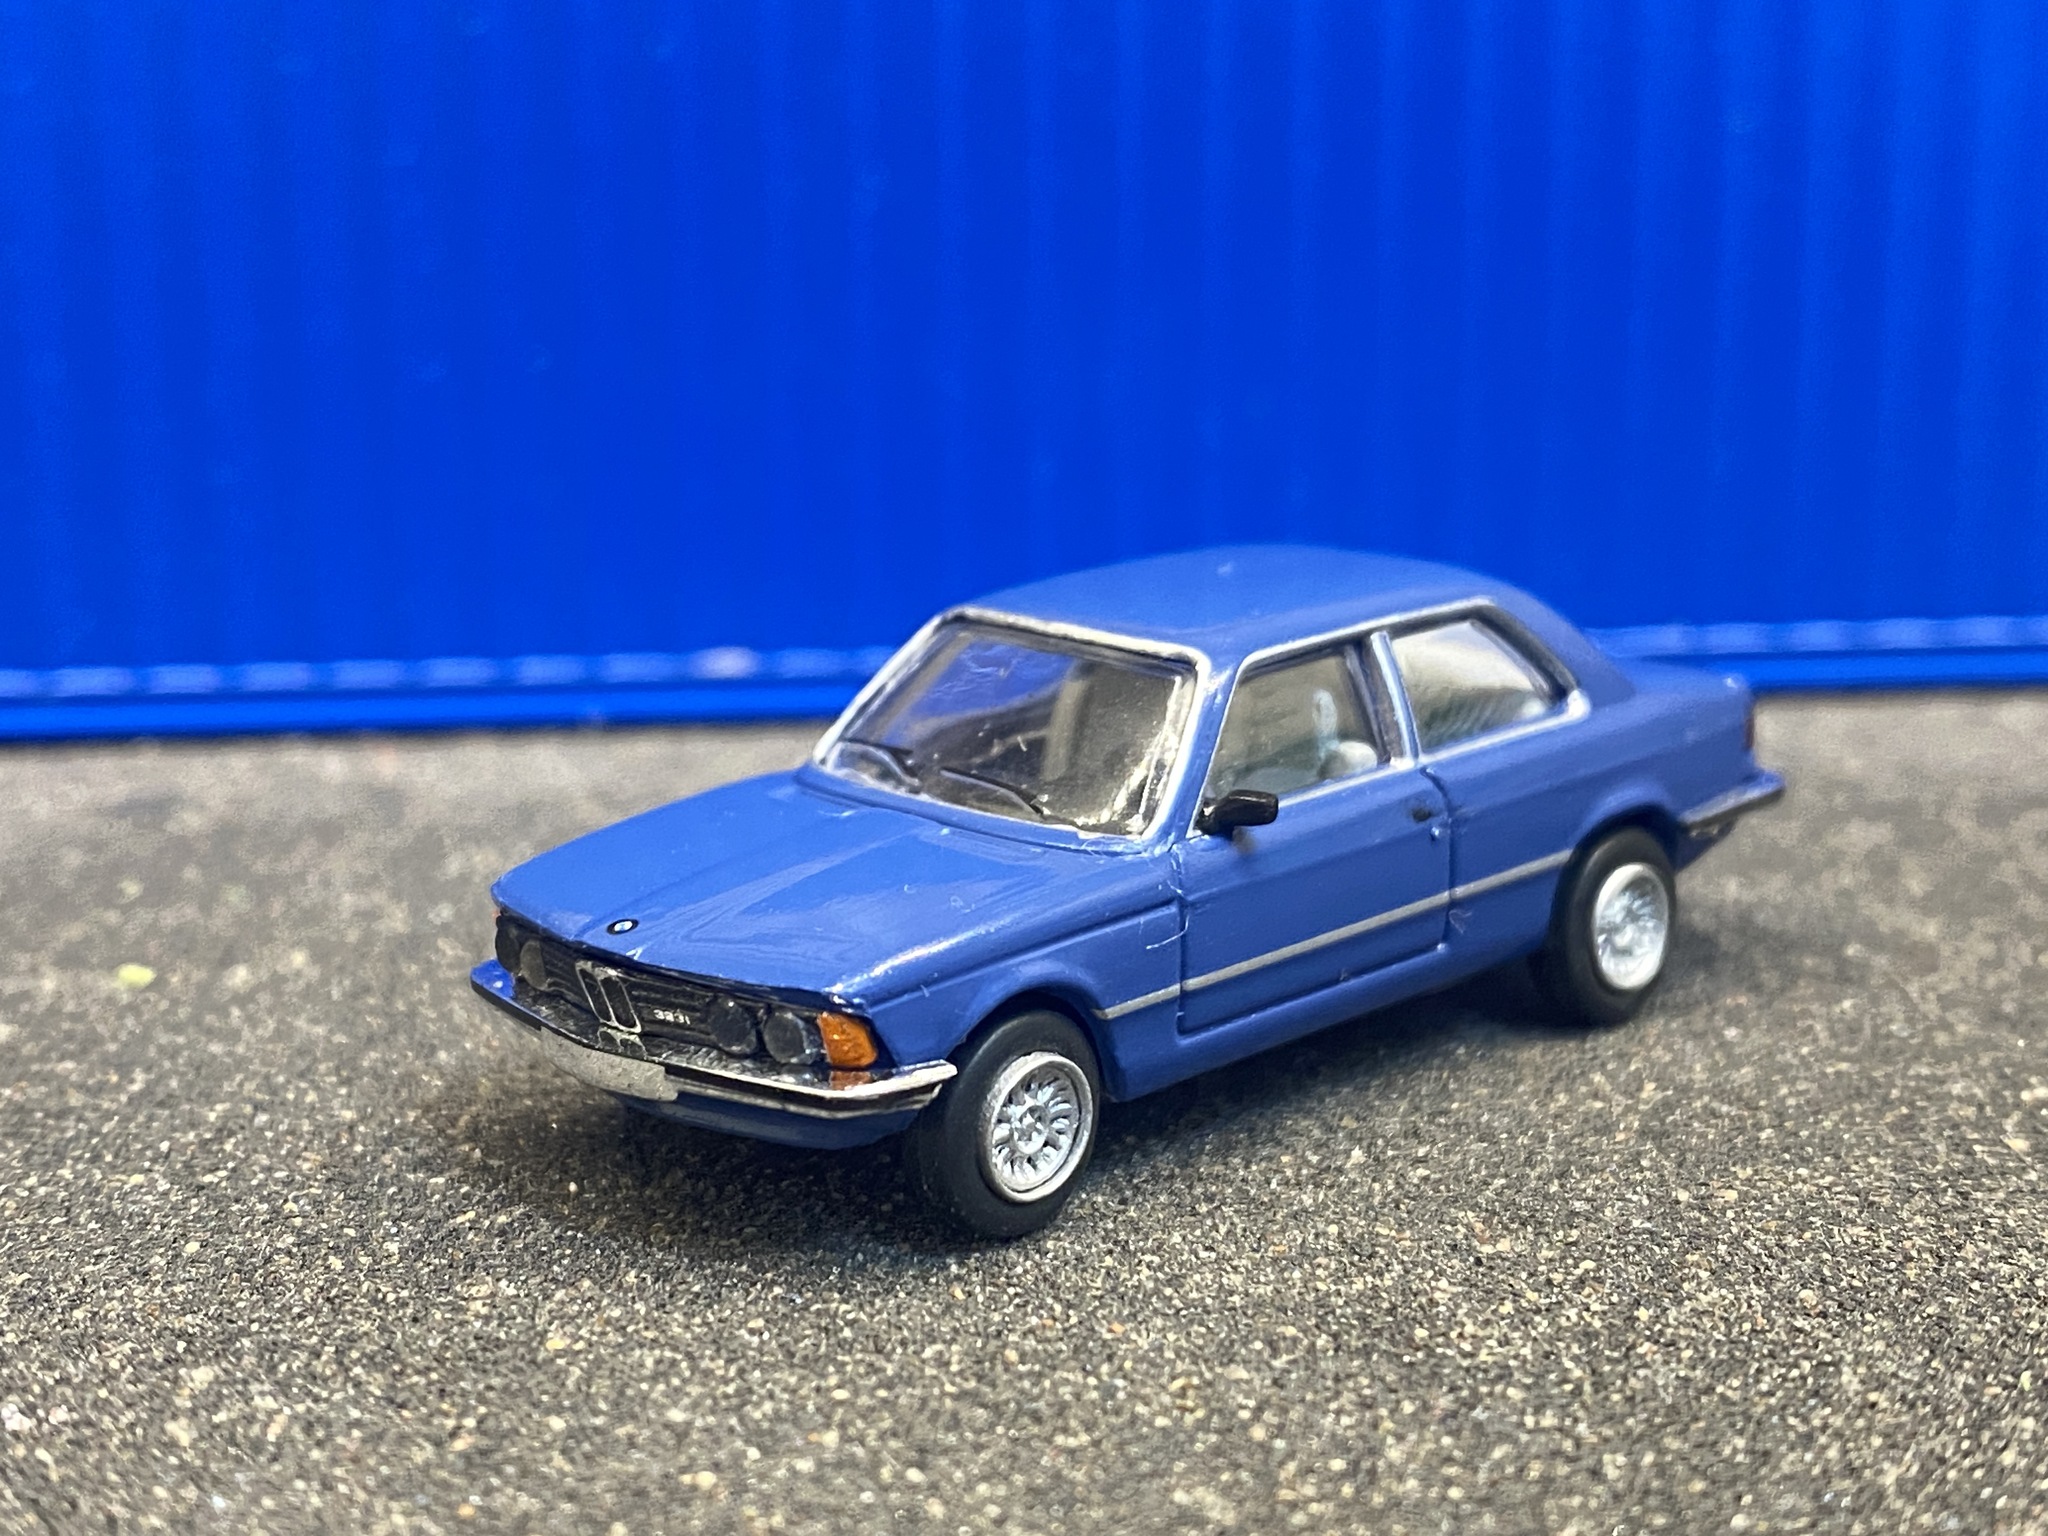 Skala 1/87 - BMW 323i, Blå fr Brekina